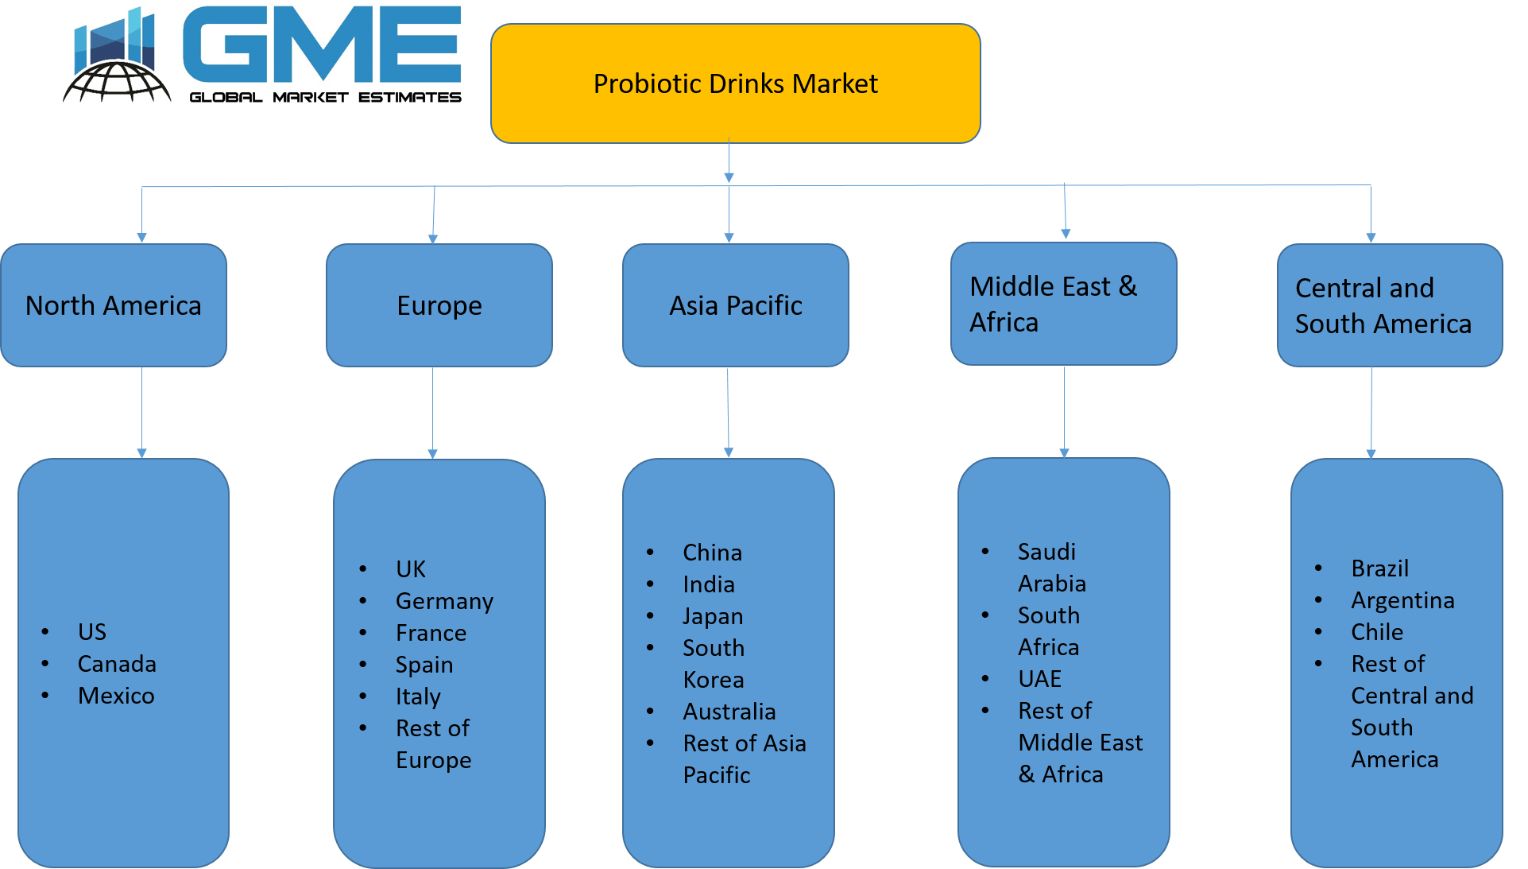 Probiotic Drinks Market - Regional Analysis